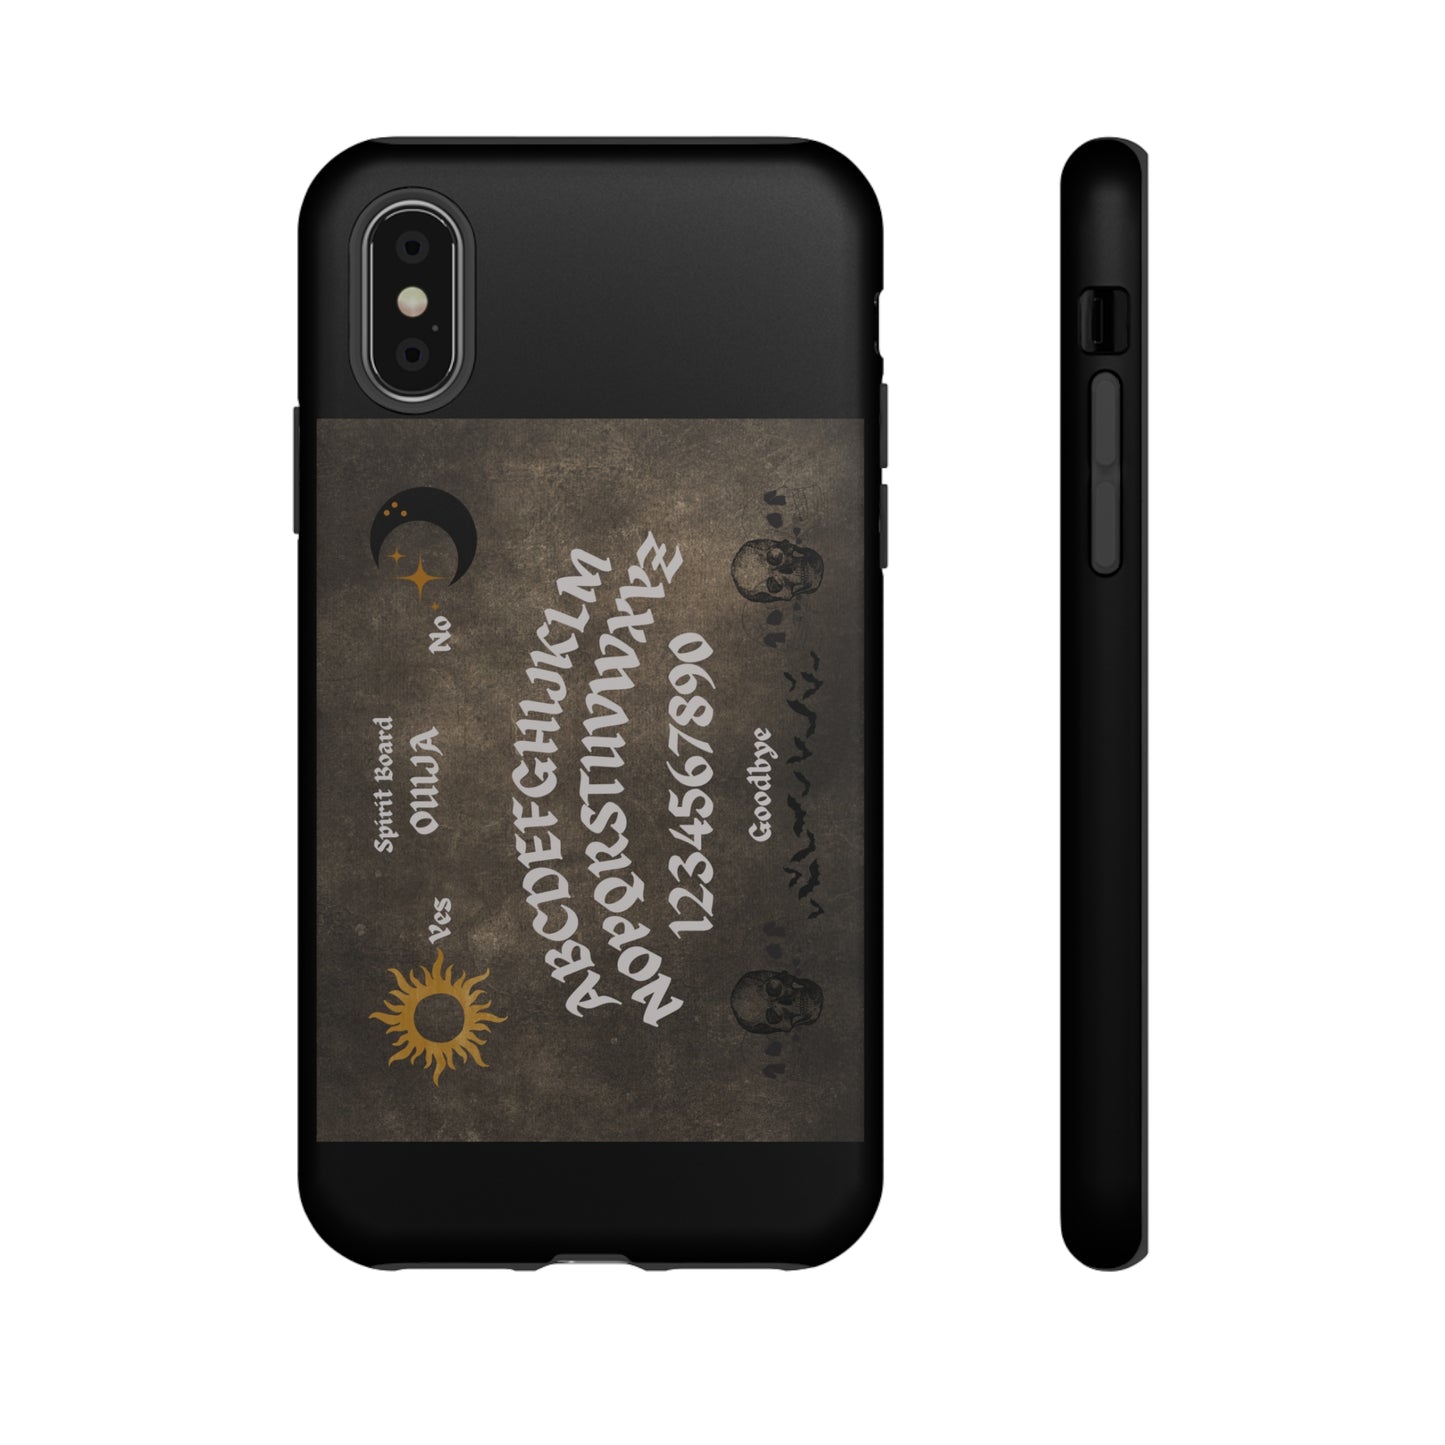 Spirit Ouija Board Tough Case for Samsung iPhone GooglePhone CaseVTZdesignsiPhone XMatteAccessoriesboardGlossy